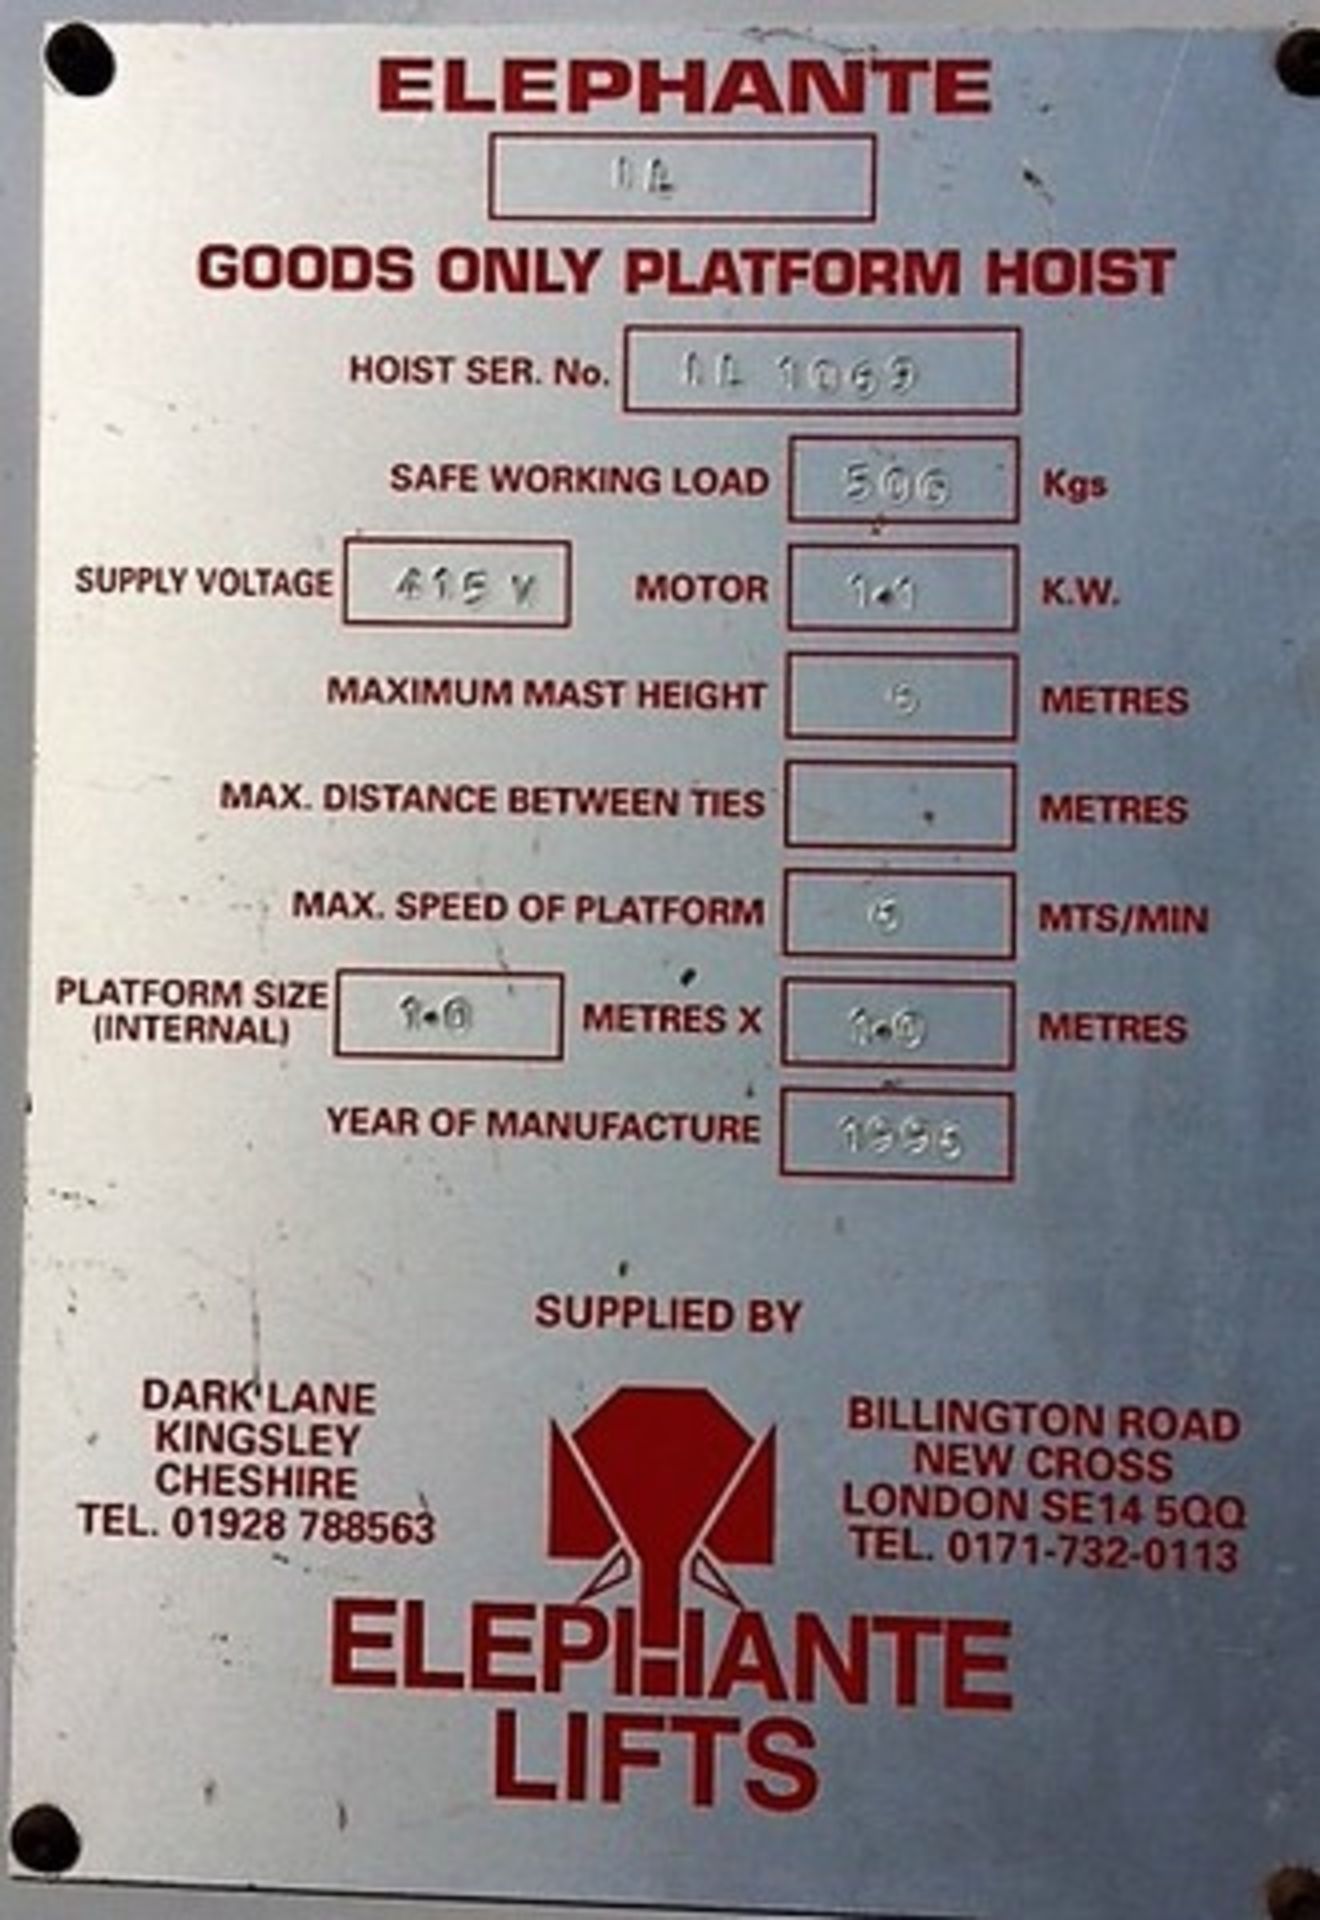 1996 ELEPHANTE goods only lift. Safe working load 500kg. S/N 1L1069. Supply voltage 415. Max mast he - Bild 4 aus 5